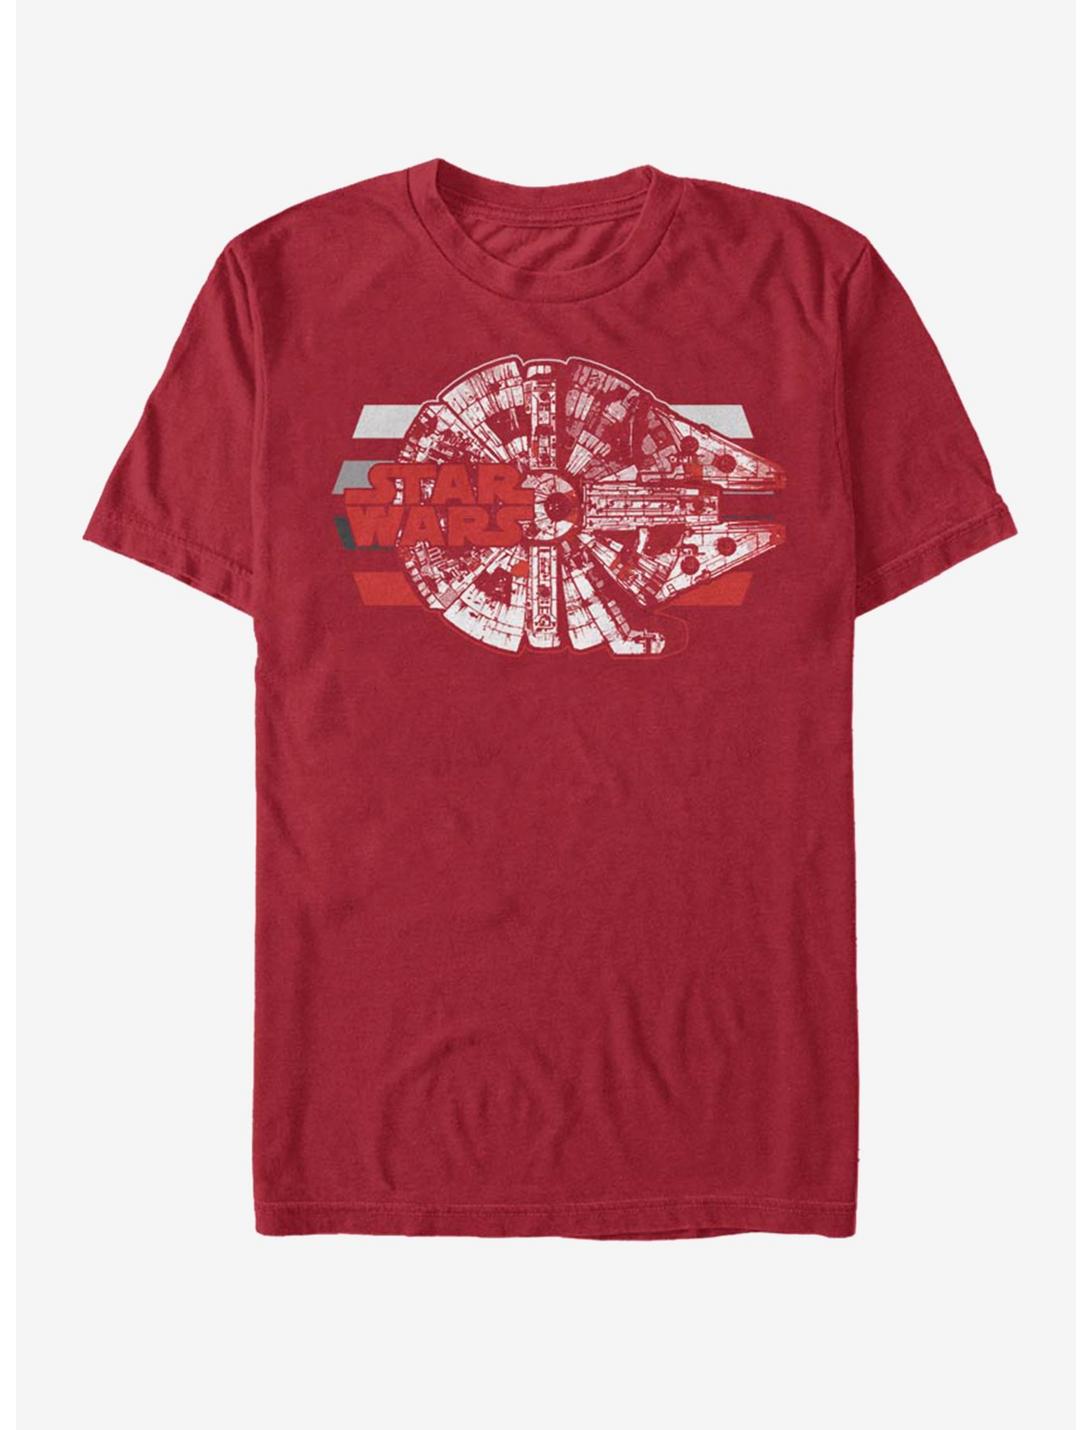 Star Wars Millennium Falcon Profile T-Shirt, , hi-res